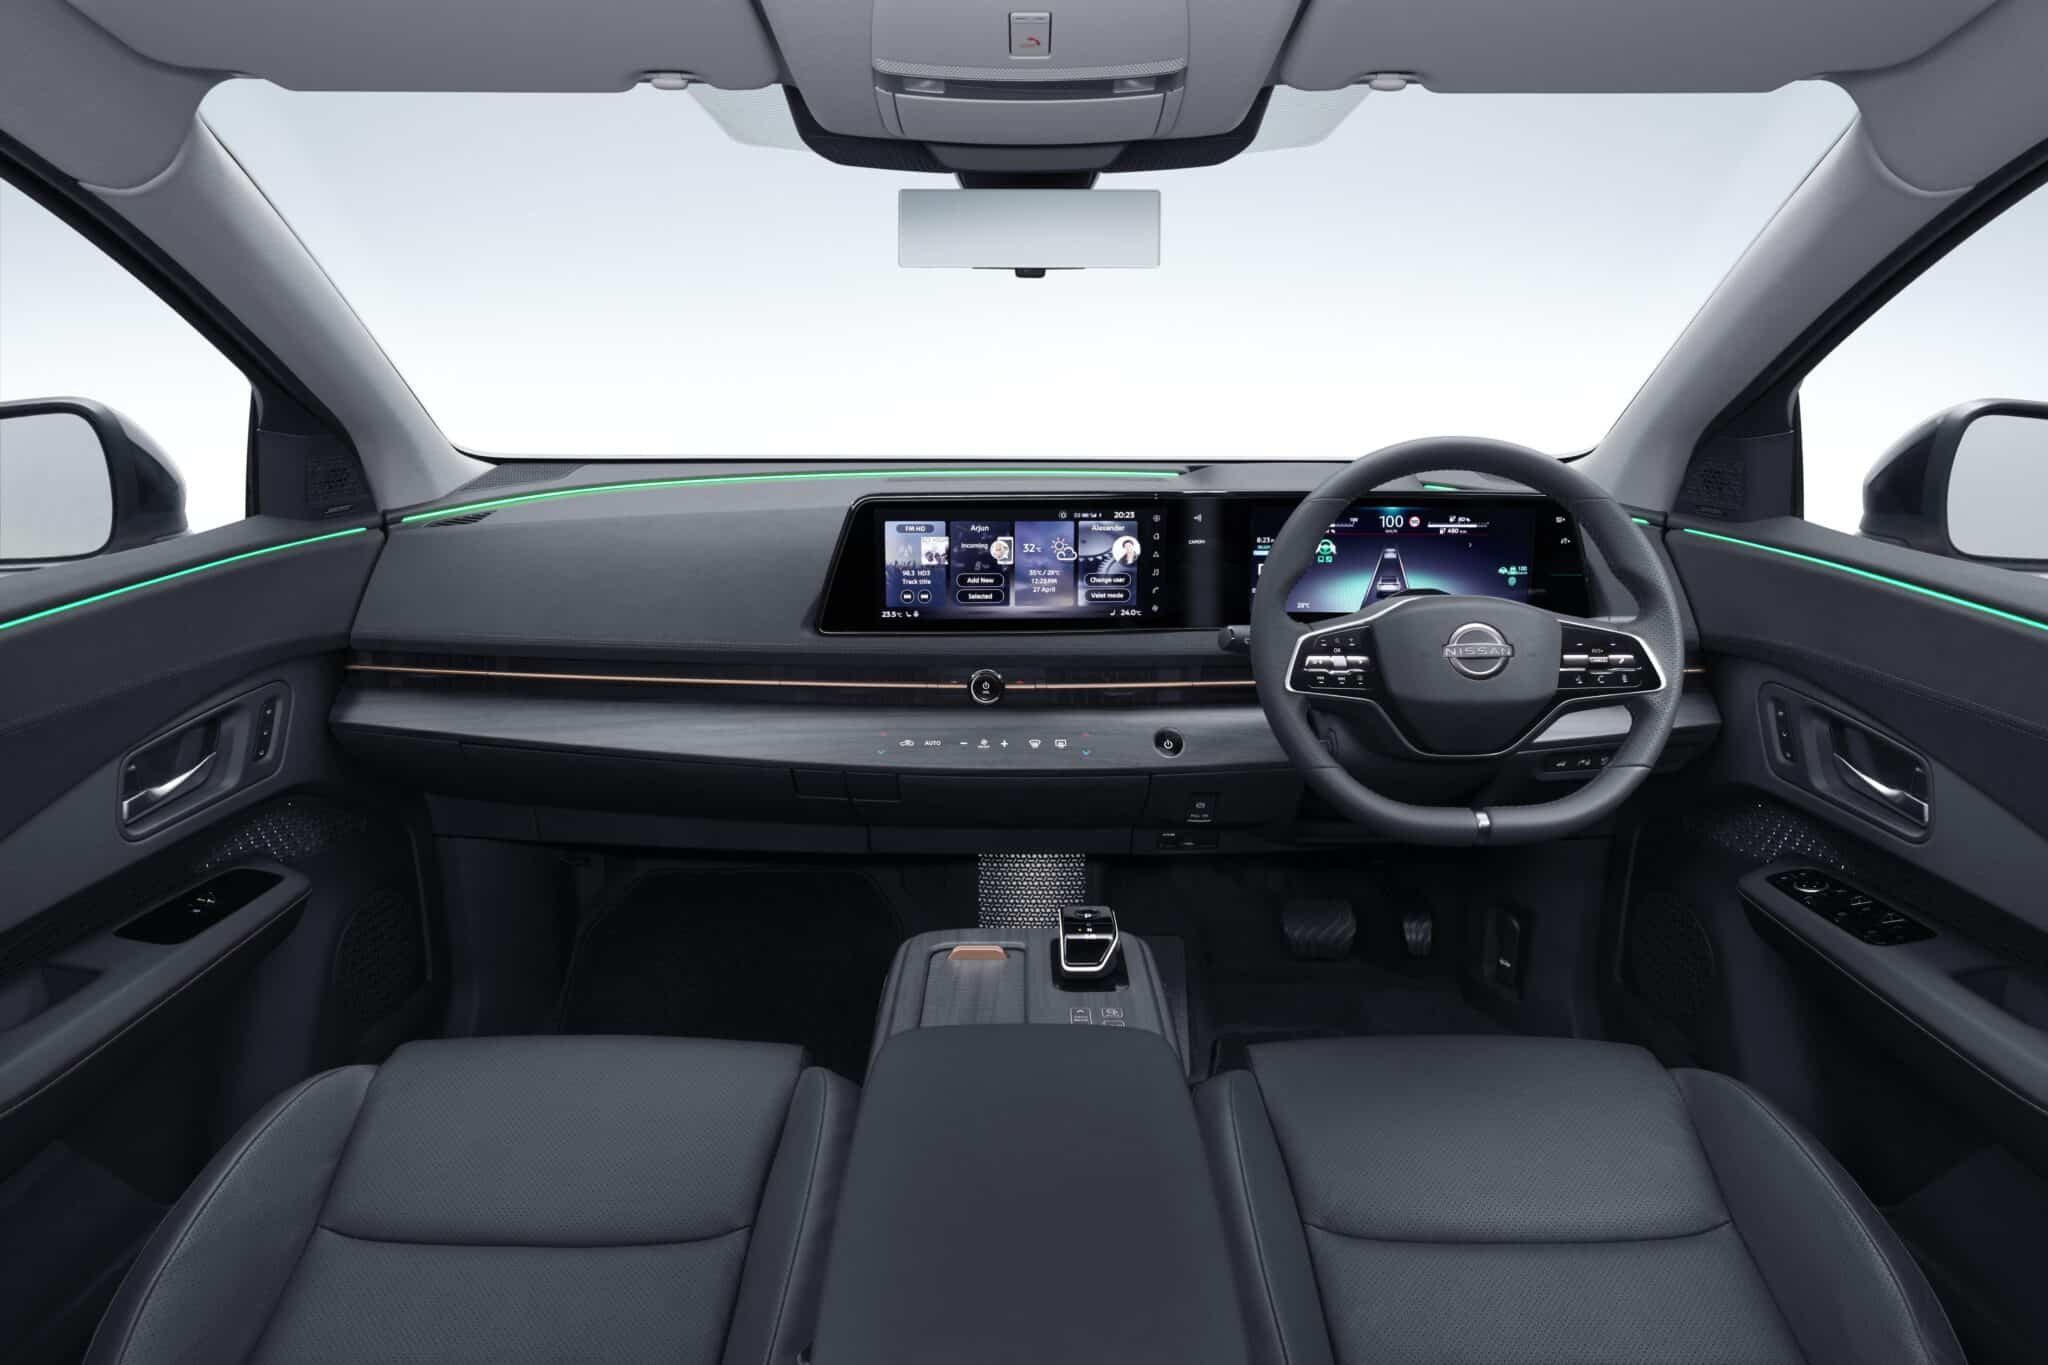 Coupé-Crossover - Vollelektrischer Nissan Ariya | ARIYA Interior Image Hands on drive mode view 1 revised min scaled